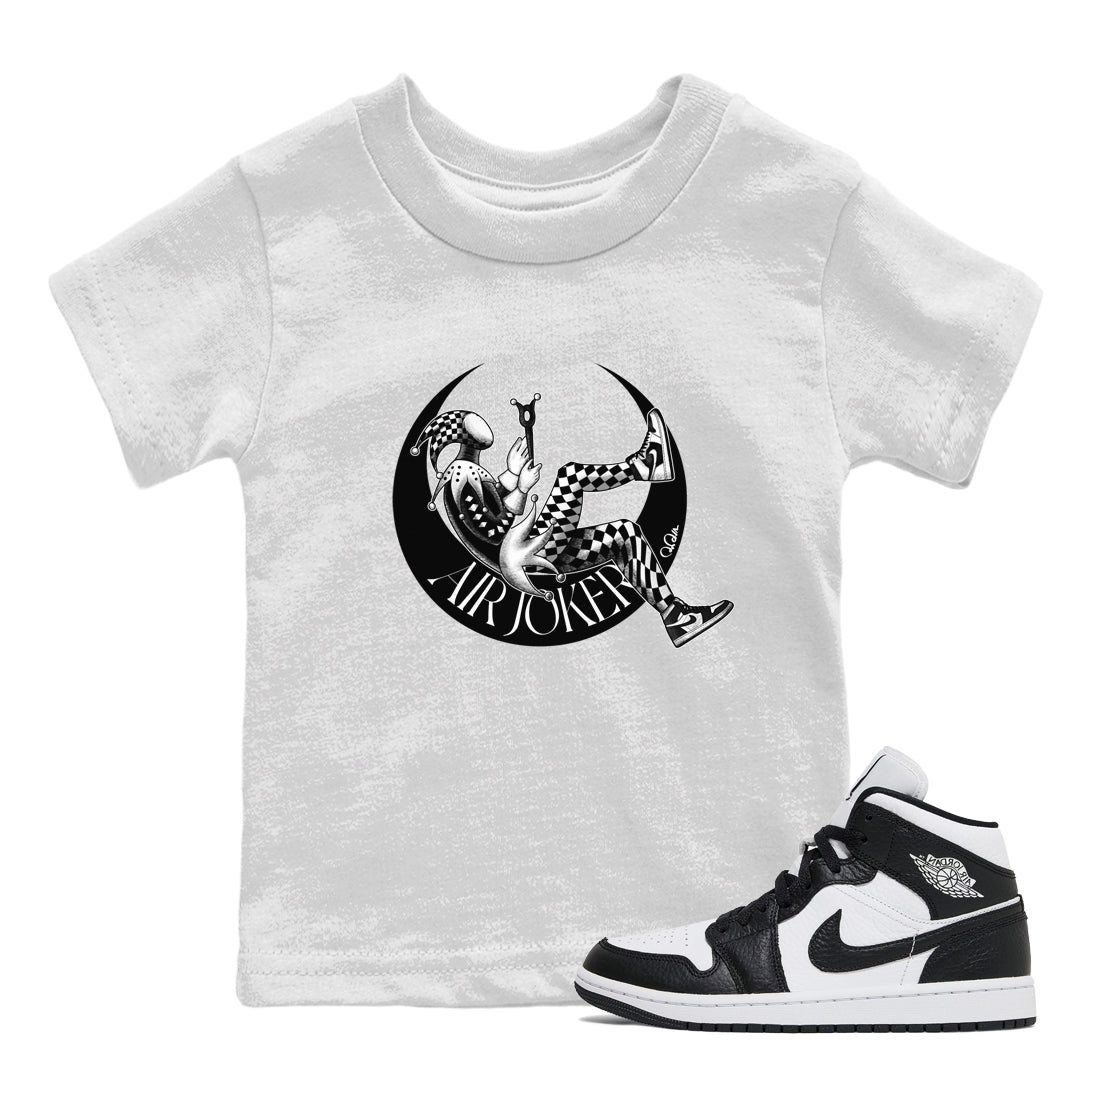 Air Jordan 1 Homage Sneaker Tees Drip Gear Zone Air Joker Sneaker Tees AJ1 Homage Shirt Kids Shirts White 1